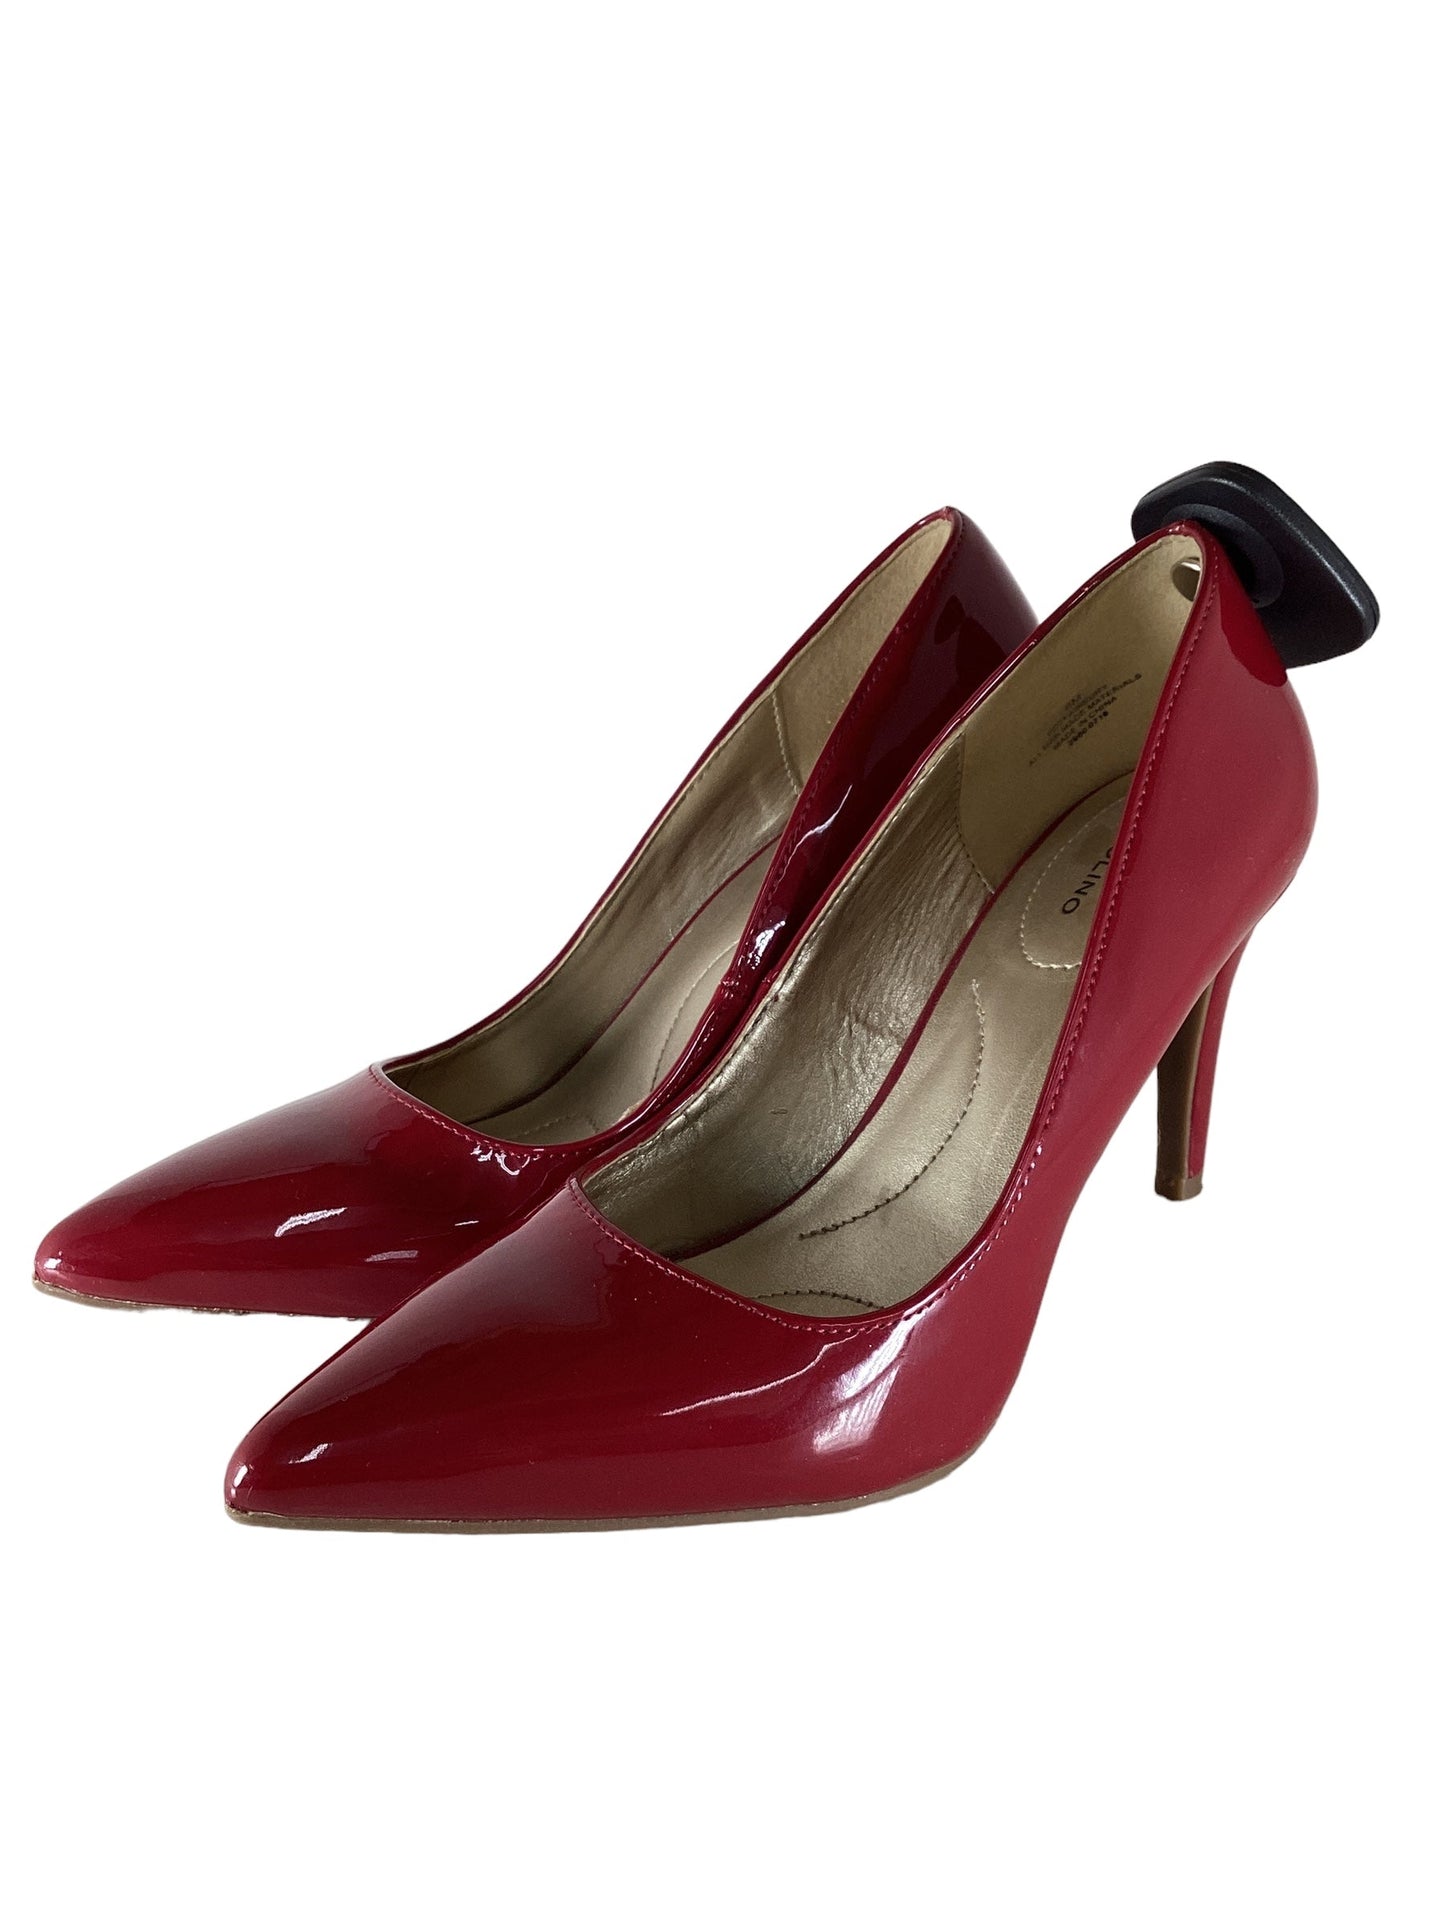 Red Shoes Heels Stiletto Bandolino, Size 6